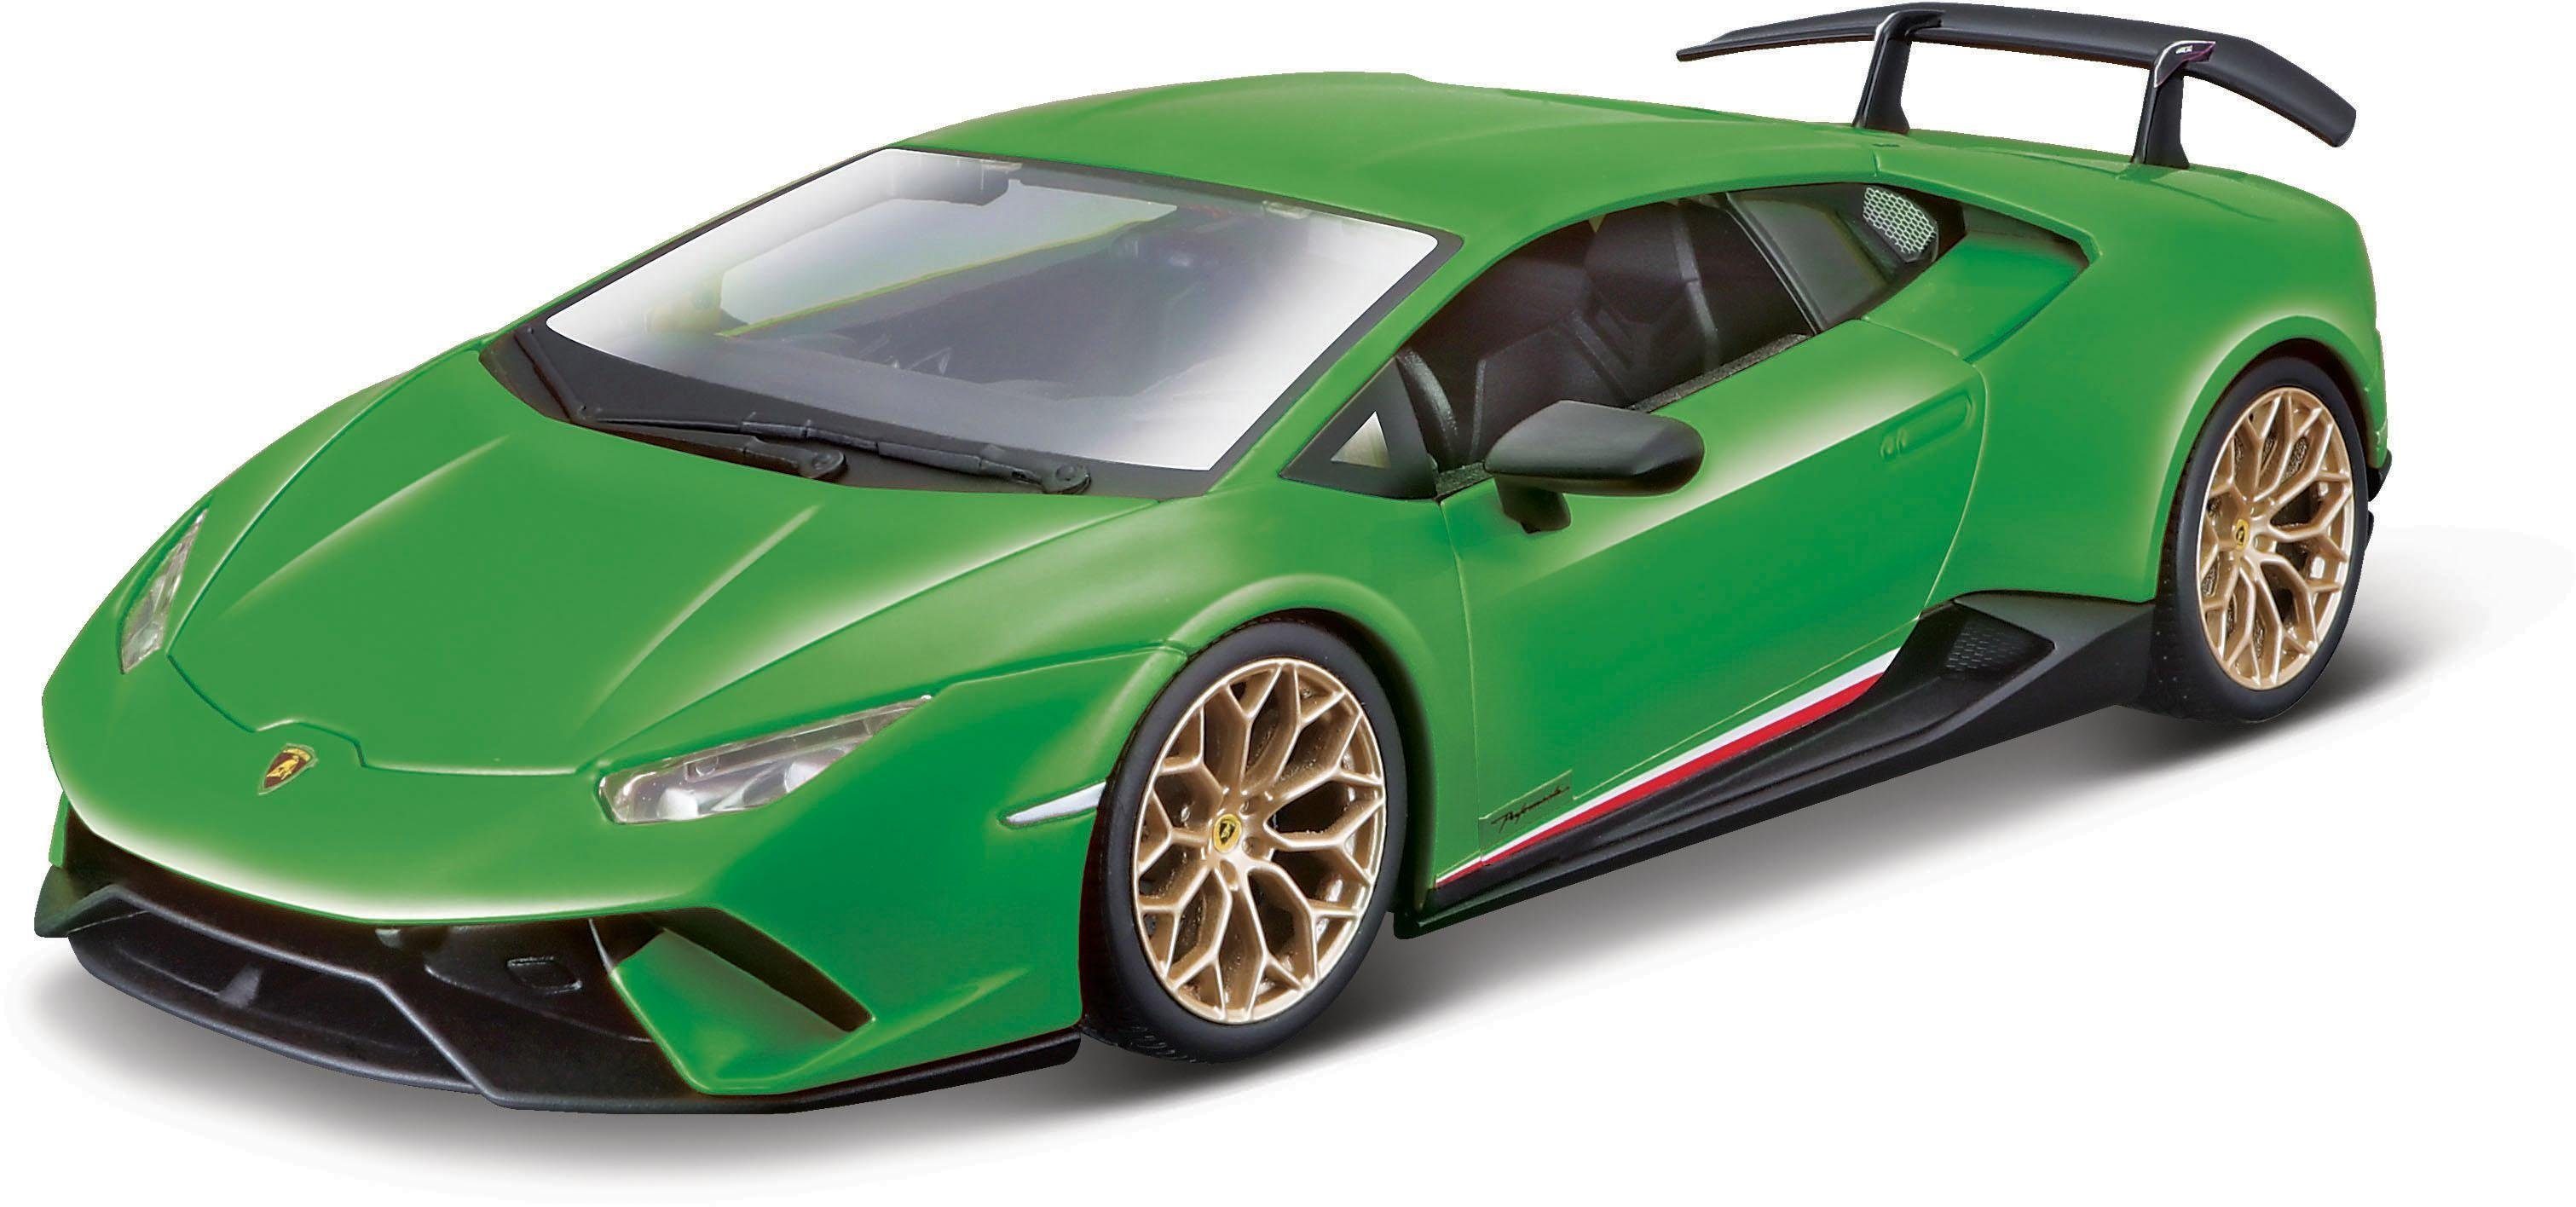 Maisto® Modellauto Lamborghini Huracan Performante 2017 grün metallic Modellauto  1:18, Maßstab 1:18